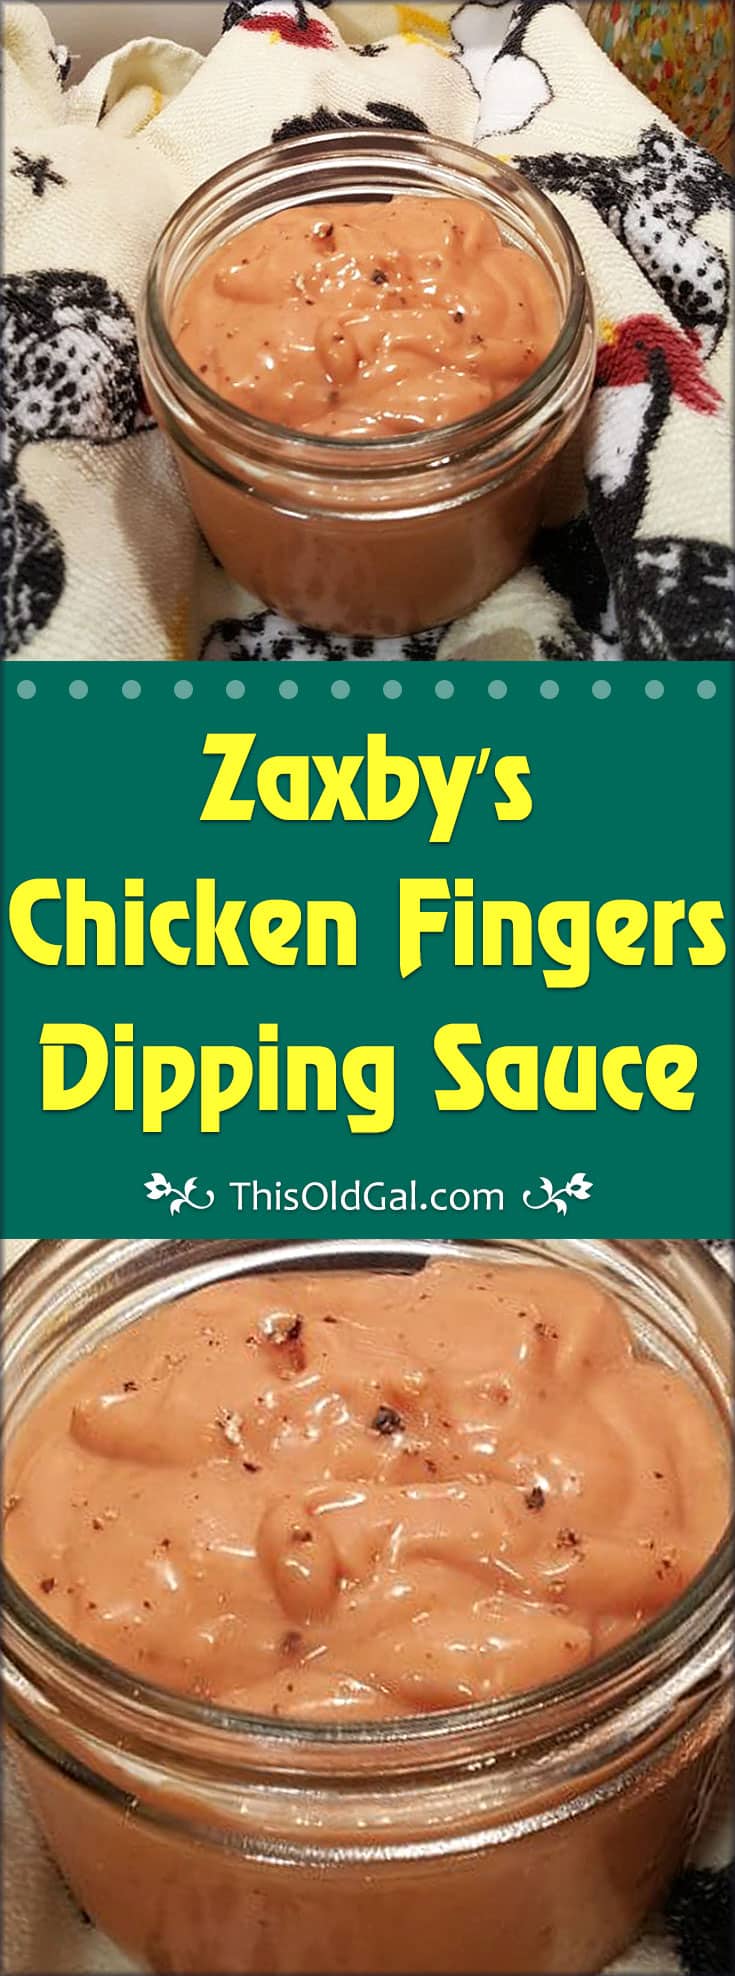 Zaxby’s Chicken Fingers Dipping Sauce Recipe (Zax Sauce)